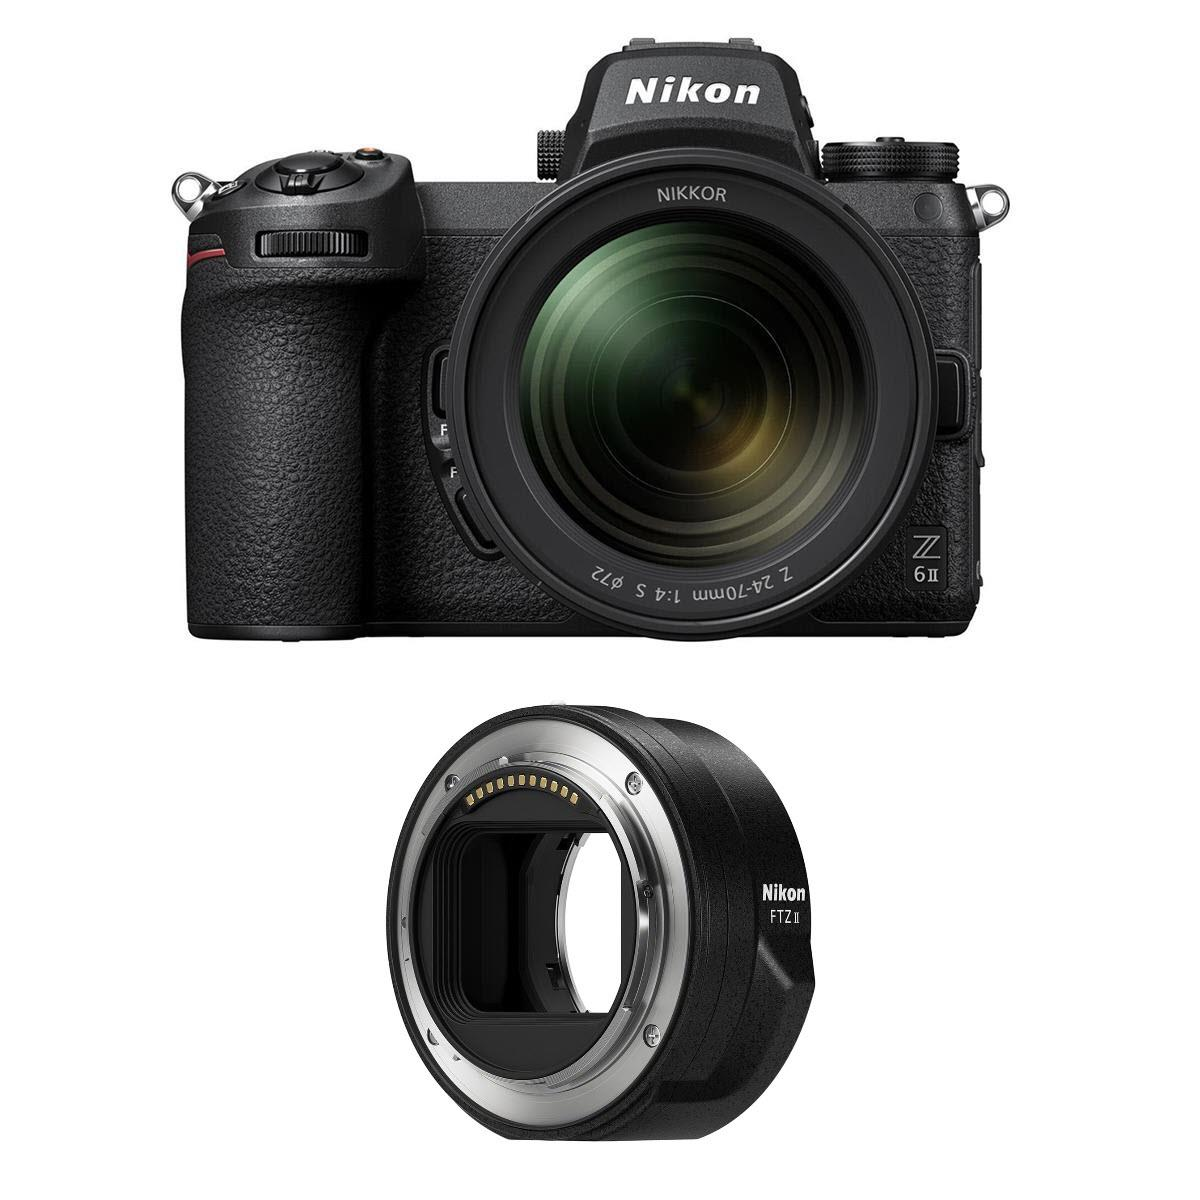 Nikon Z6 II Mirrorless Digital Camera with 24-70mm f/4 Lens and FTZ II Adapter Kit